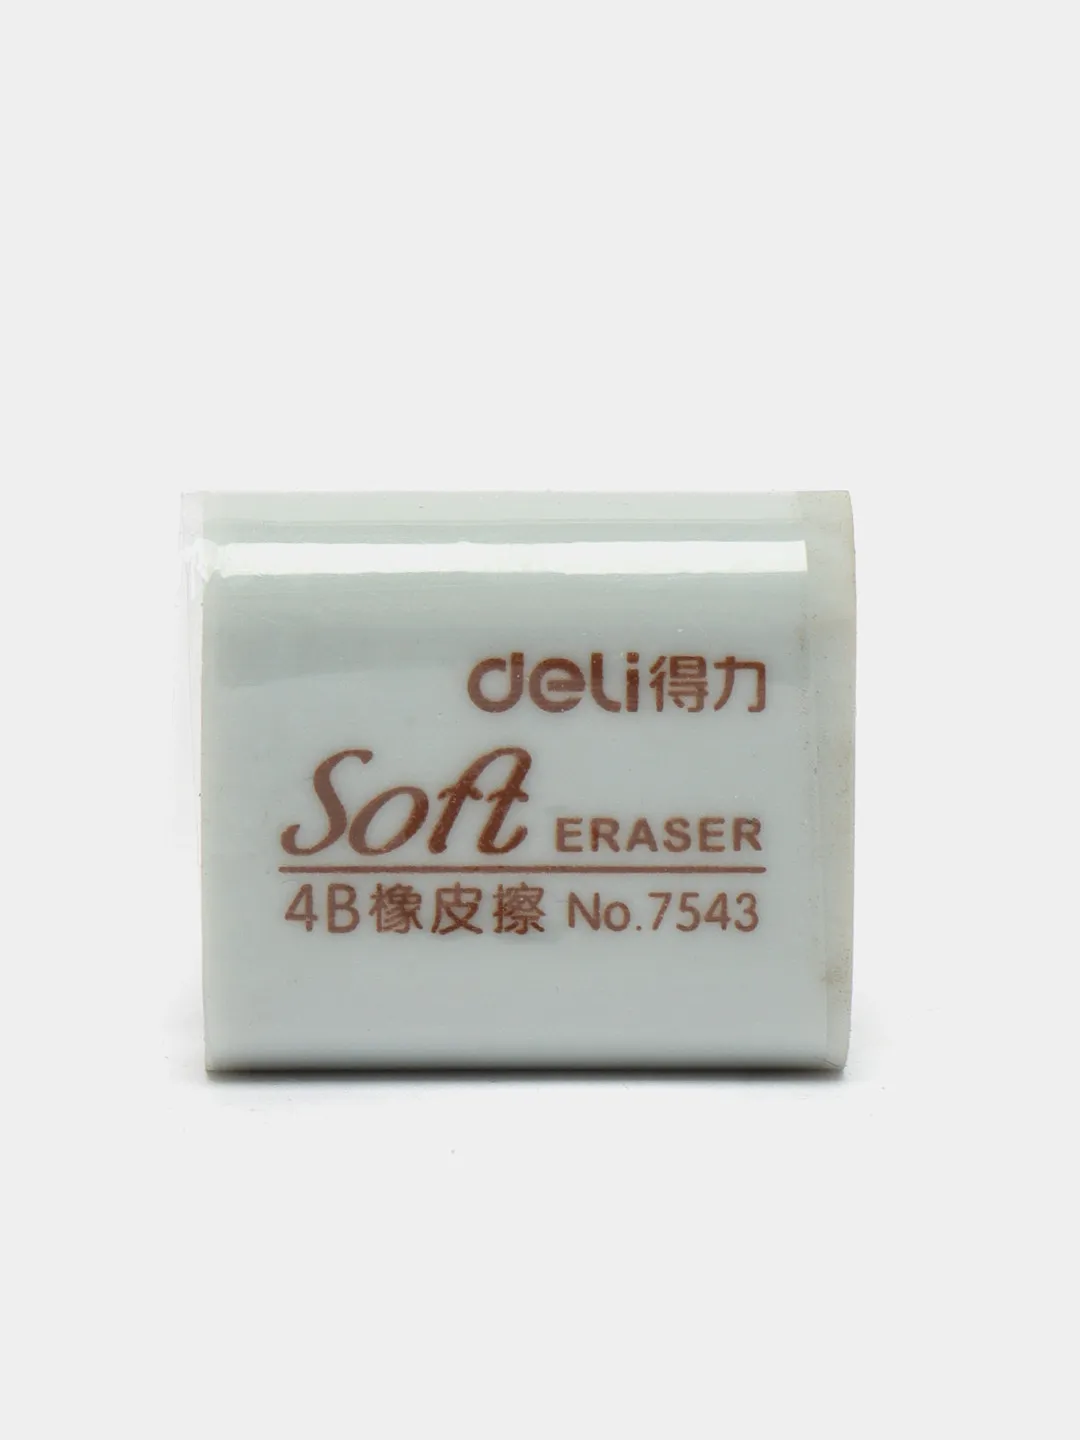 Eraser 7543 Deli#1